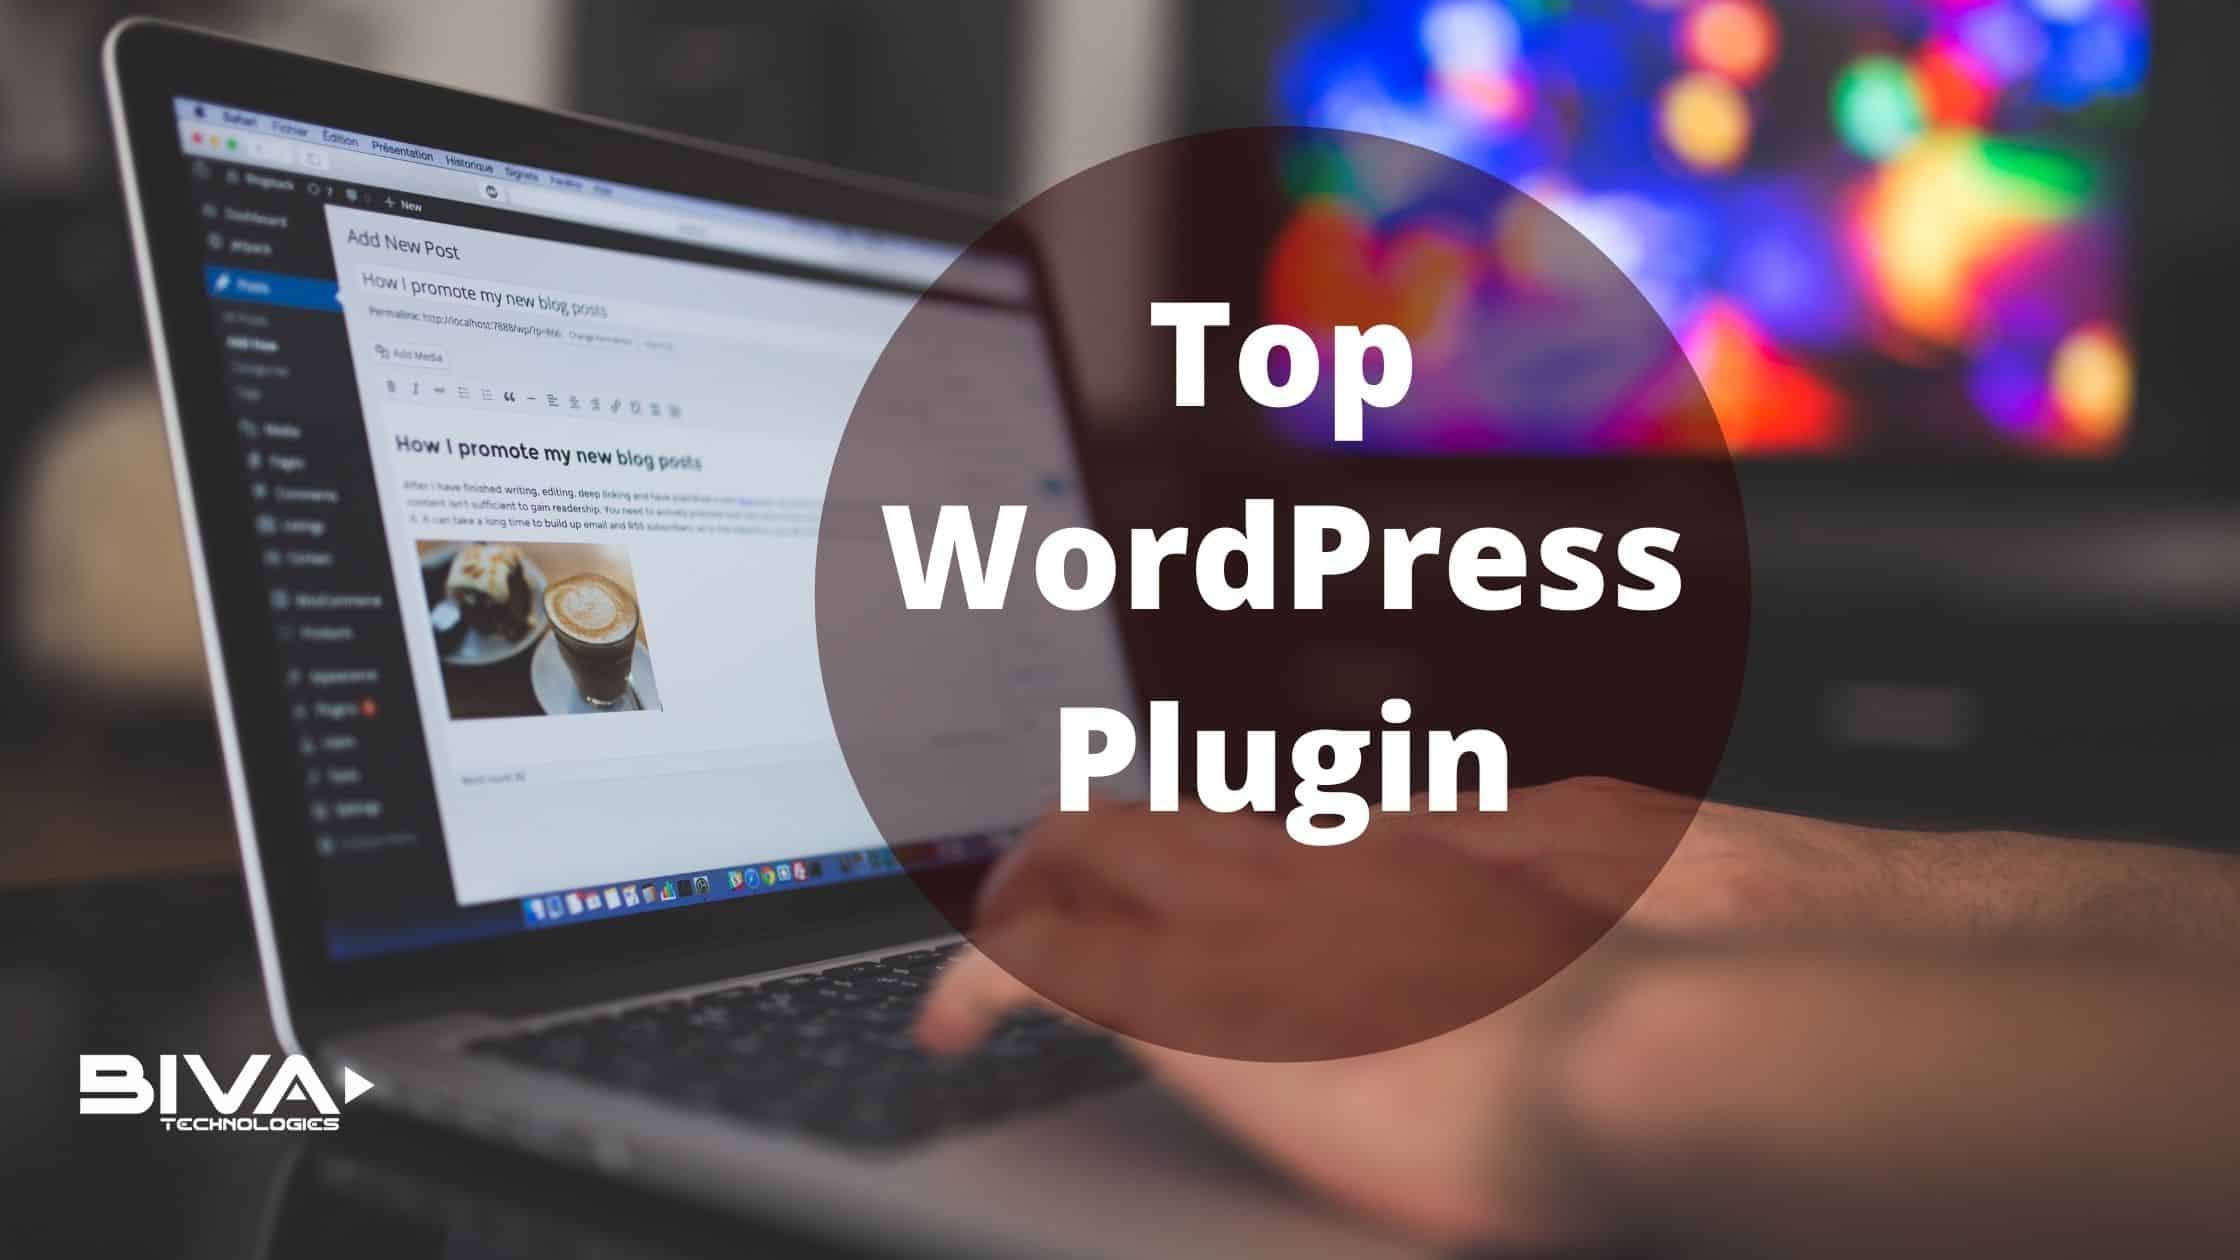 Top WordPress Plugin for Small Businesses